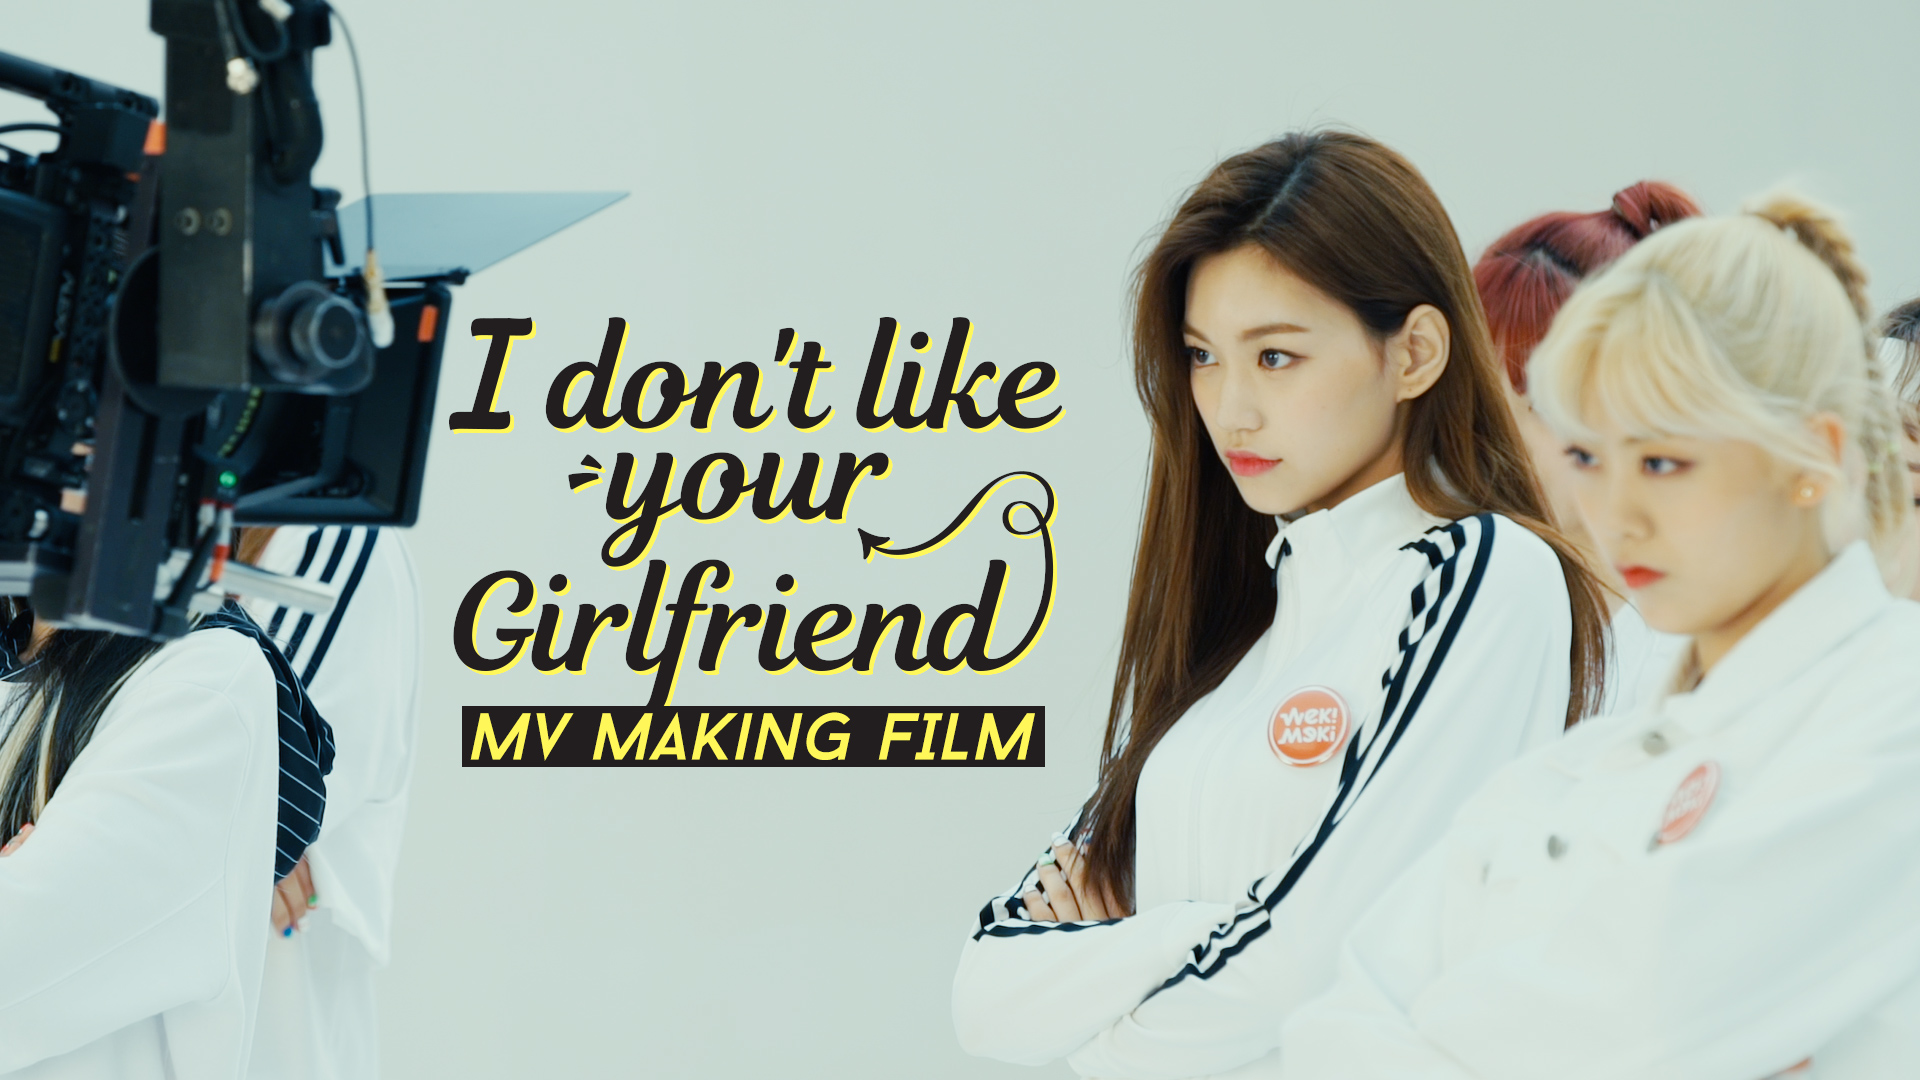 Weki Meki 위키미키 - I don't like your Girlfriend M/V MAKING FILM